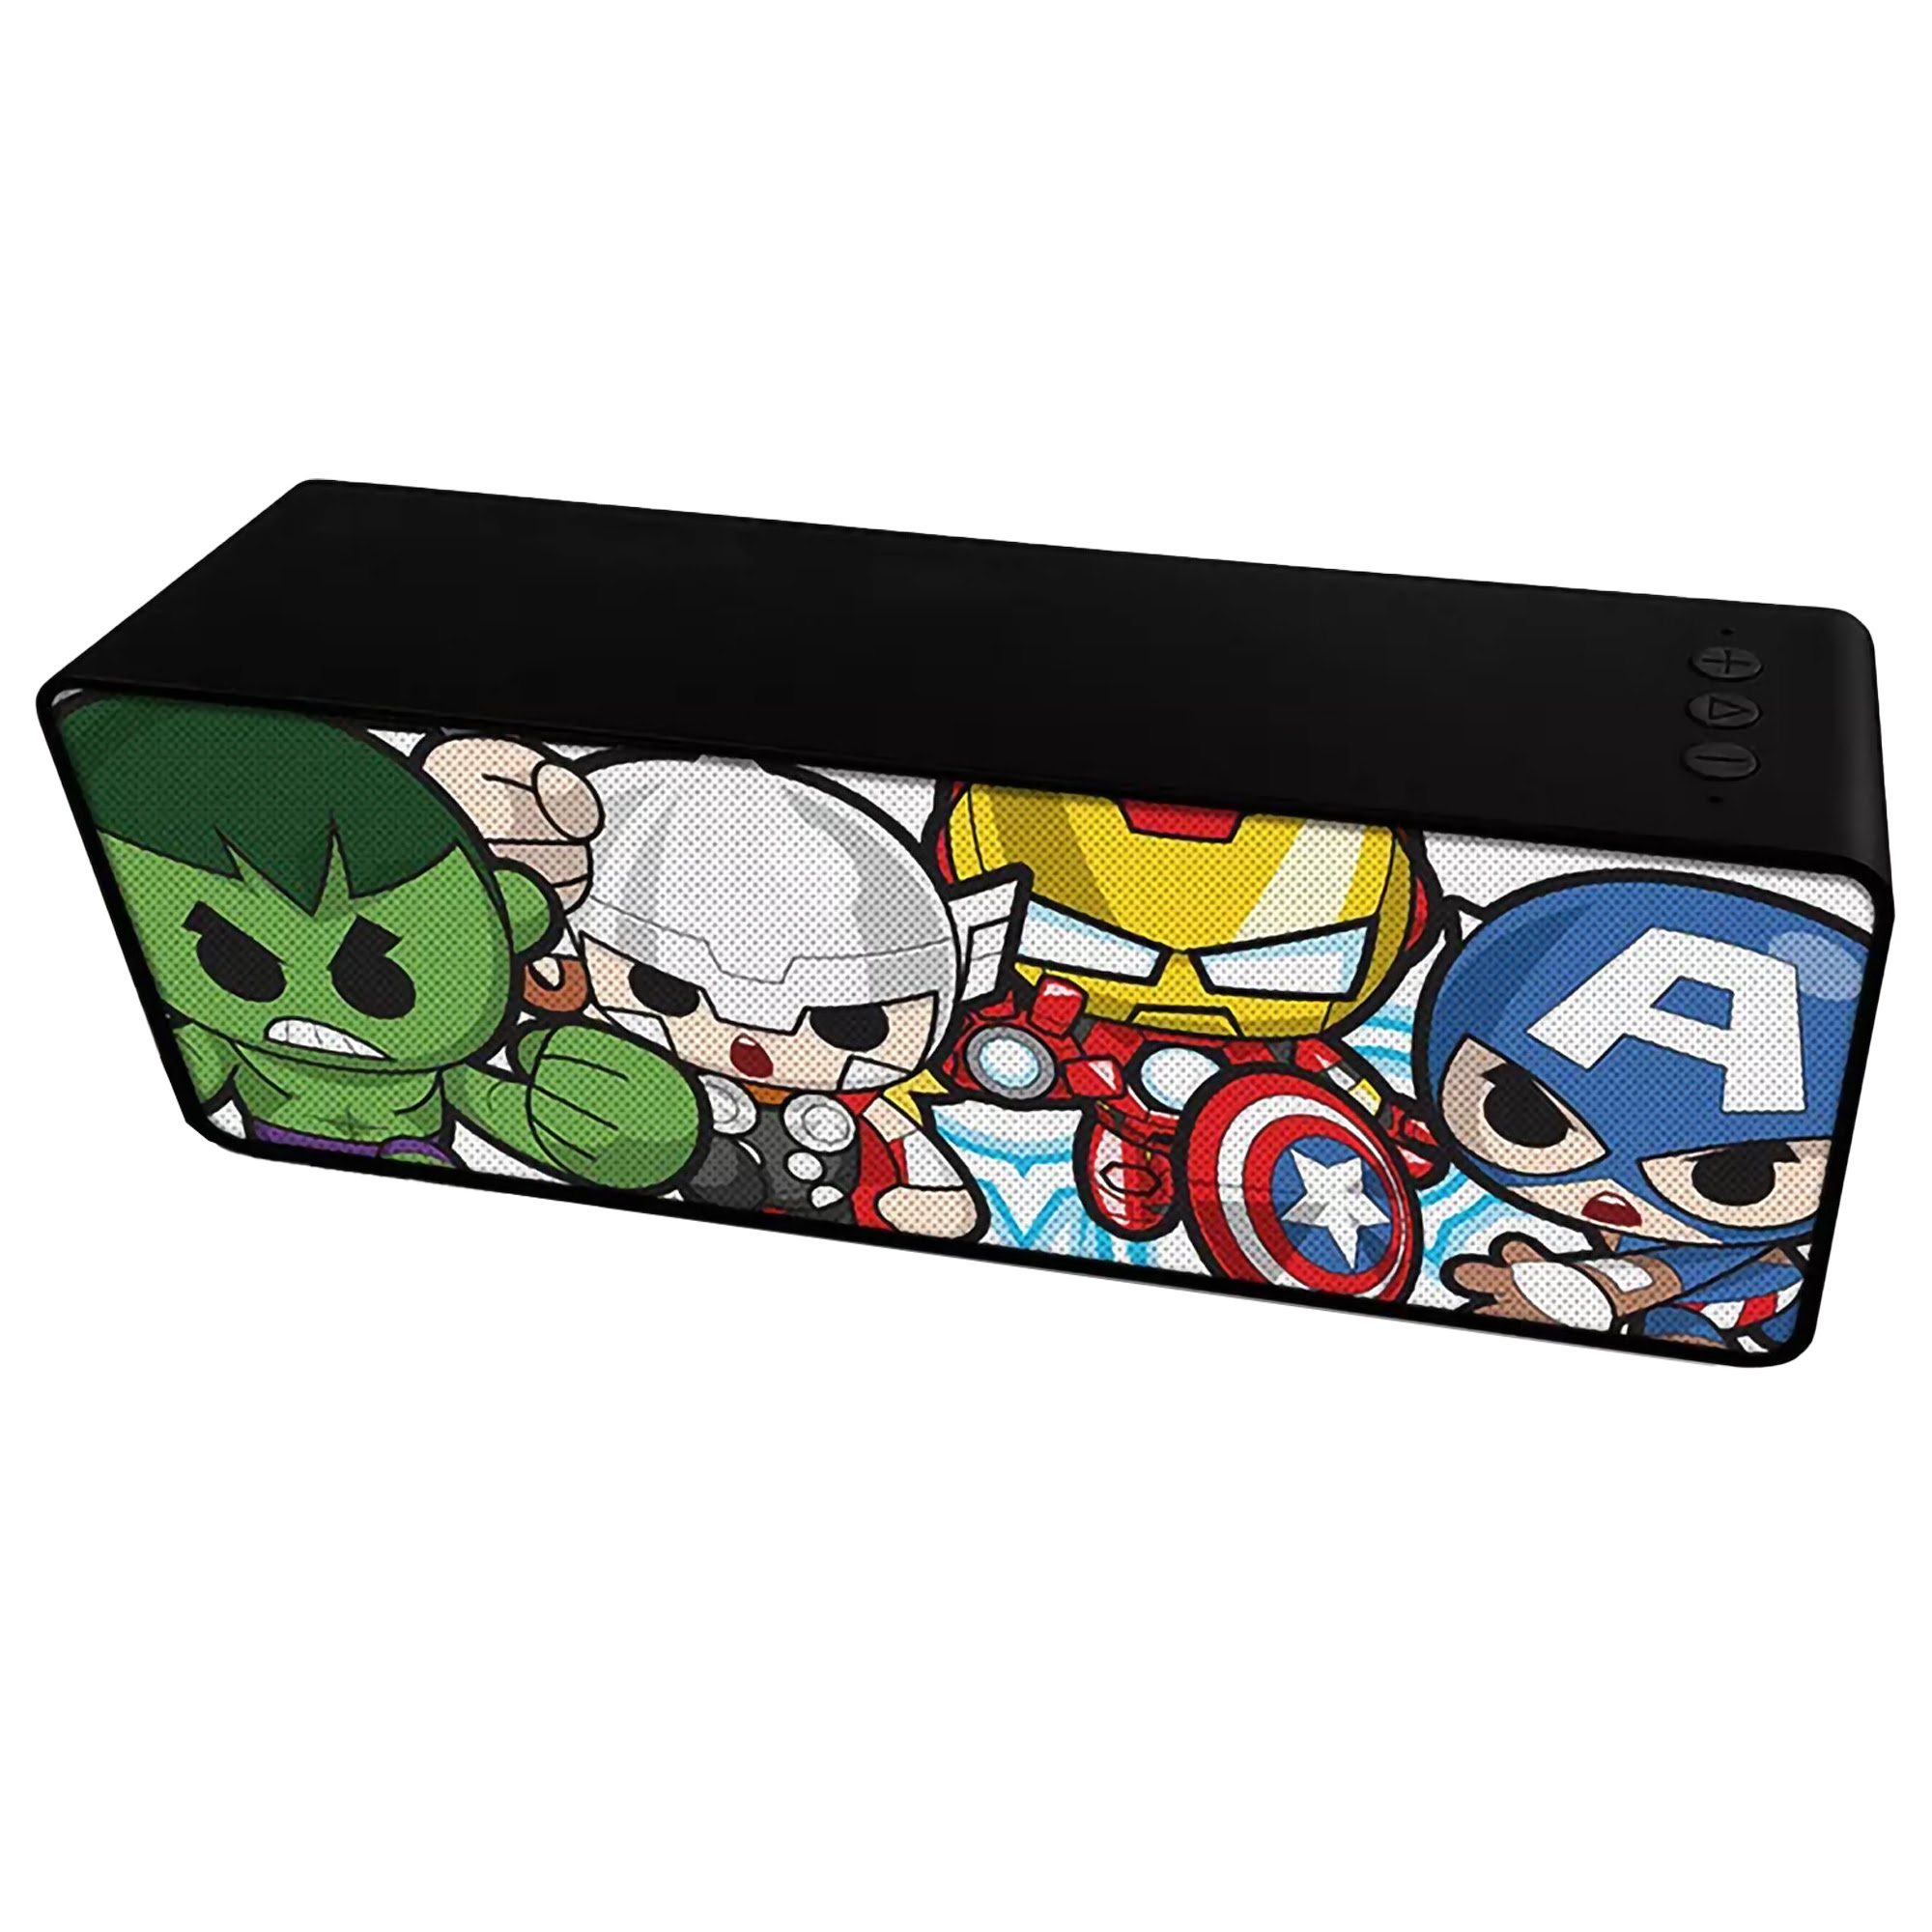 Altavoz Bt Stereo 2.1 Portátil Inalambrico 10w Avengers Marvel Multicolor - negro - 